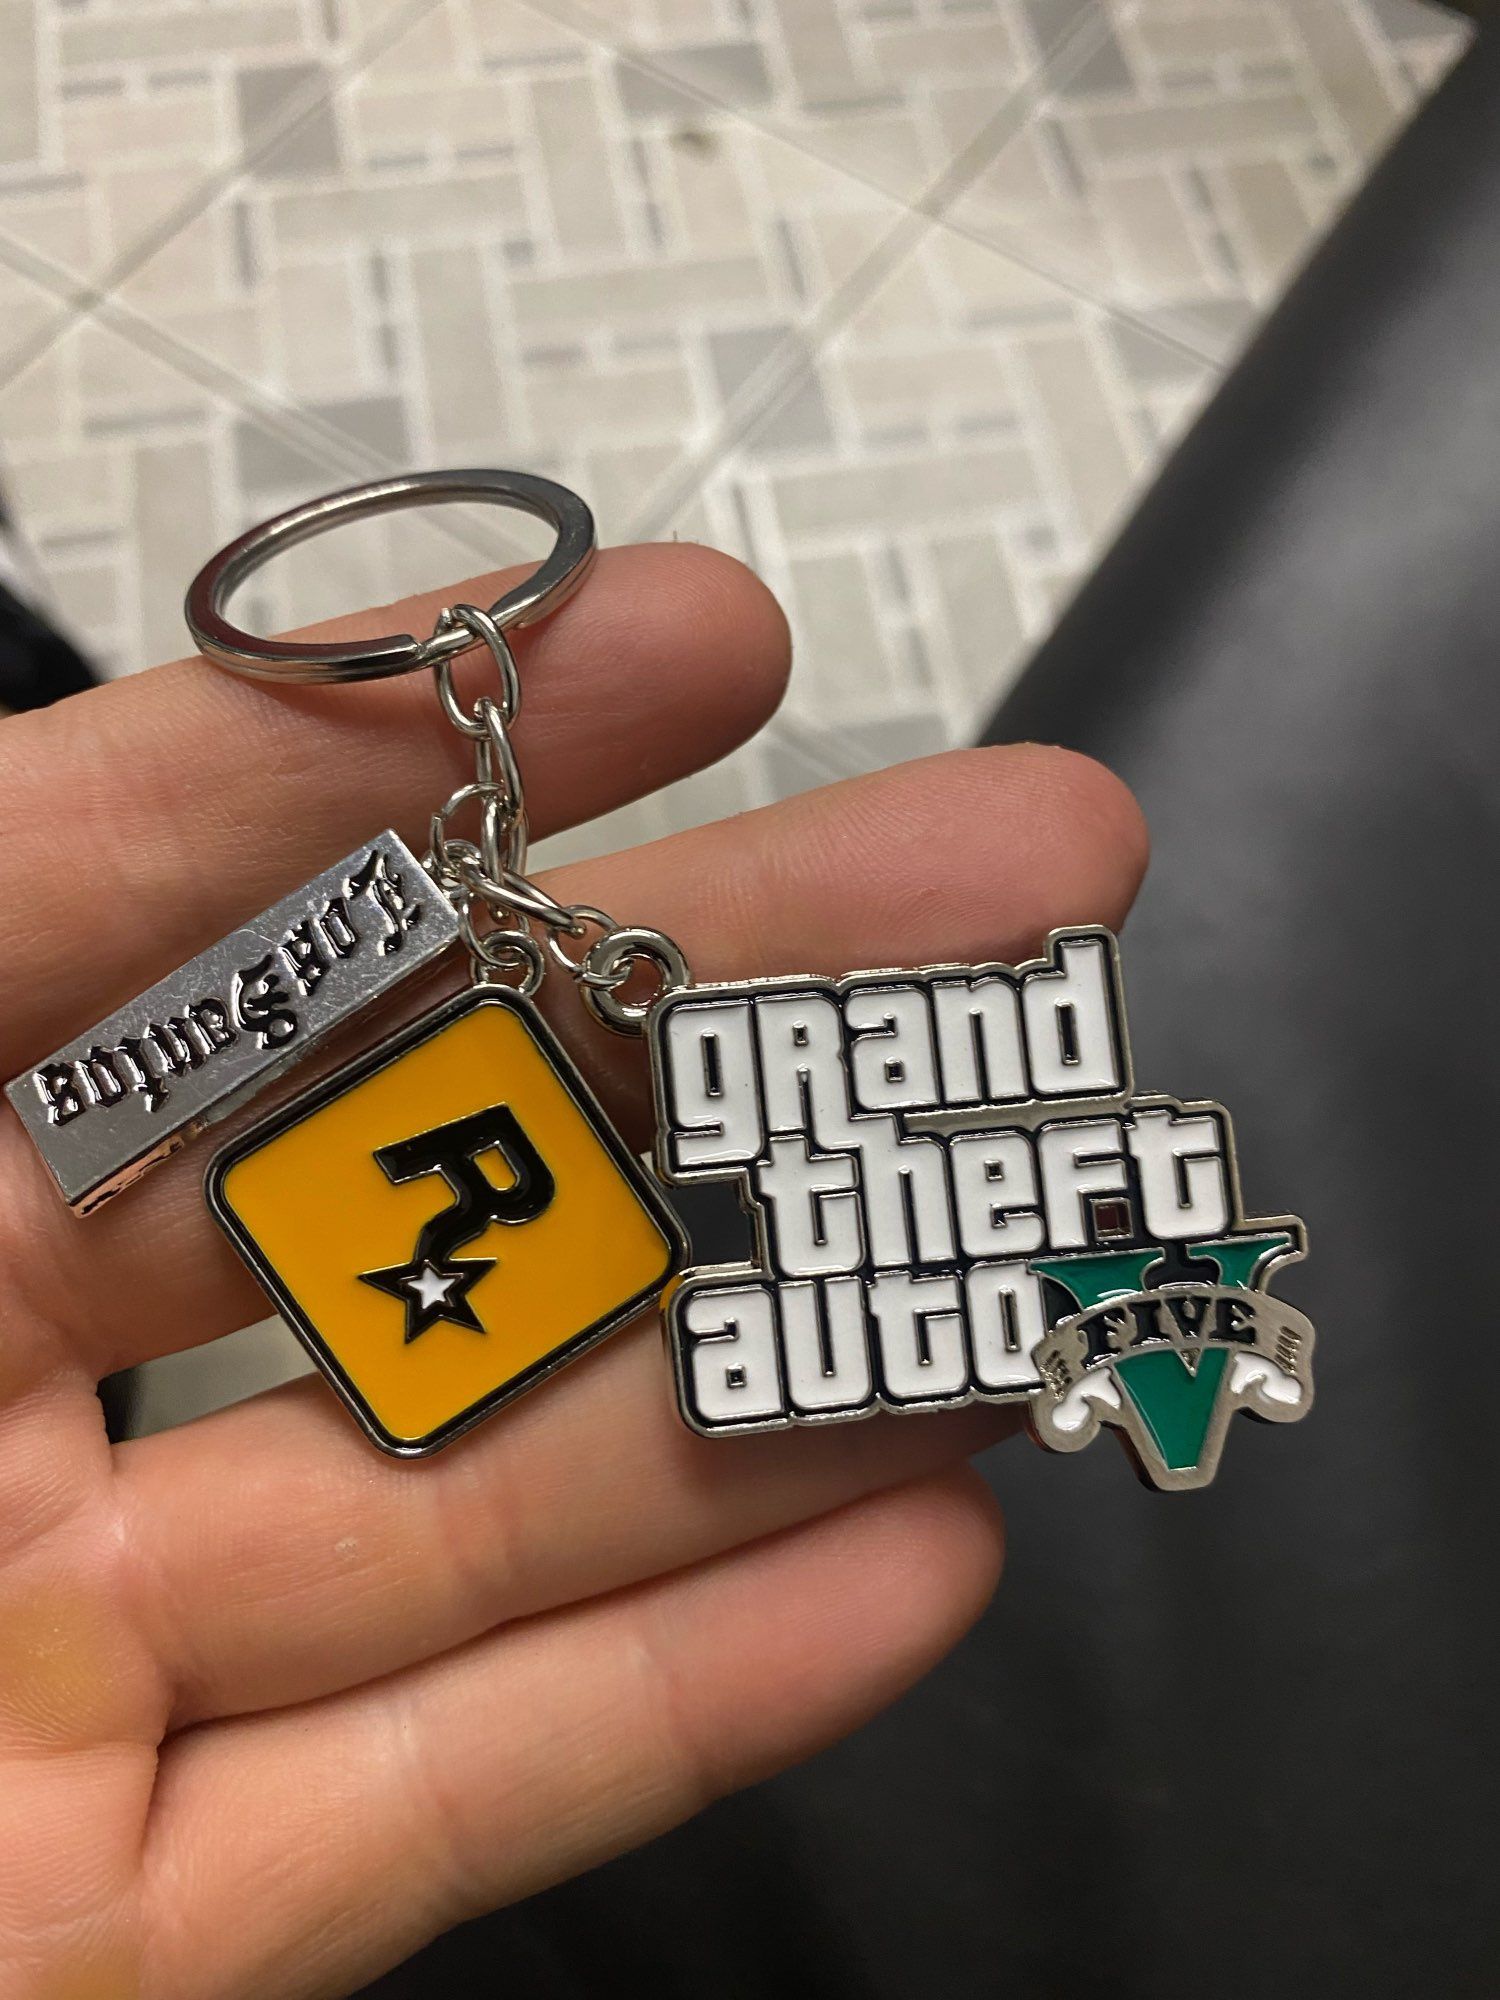 Брелок для ключей GTA V Grand Theft Auto PS4 Xbox РС game PS5 ГТА игры